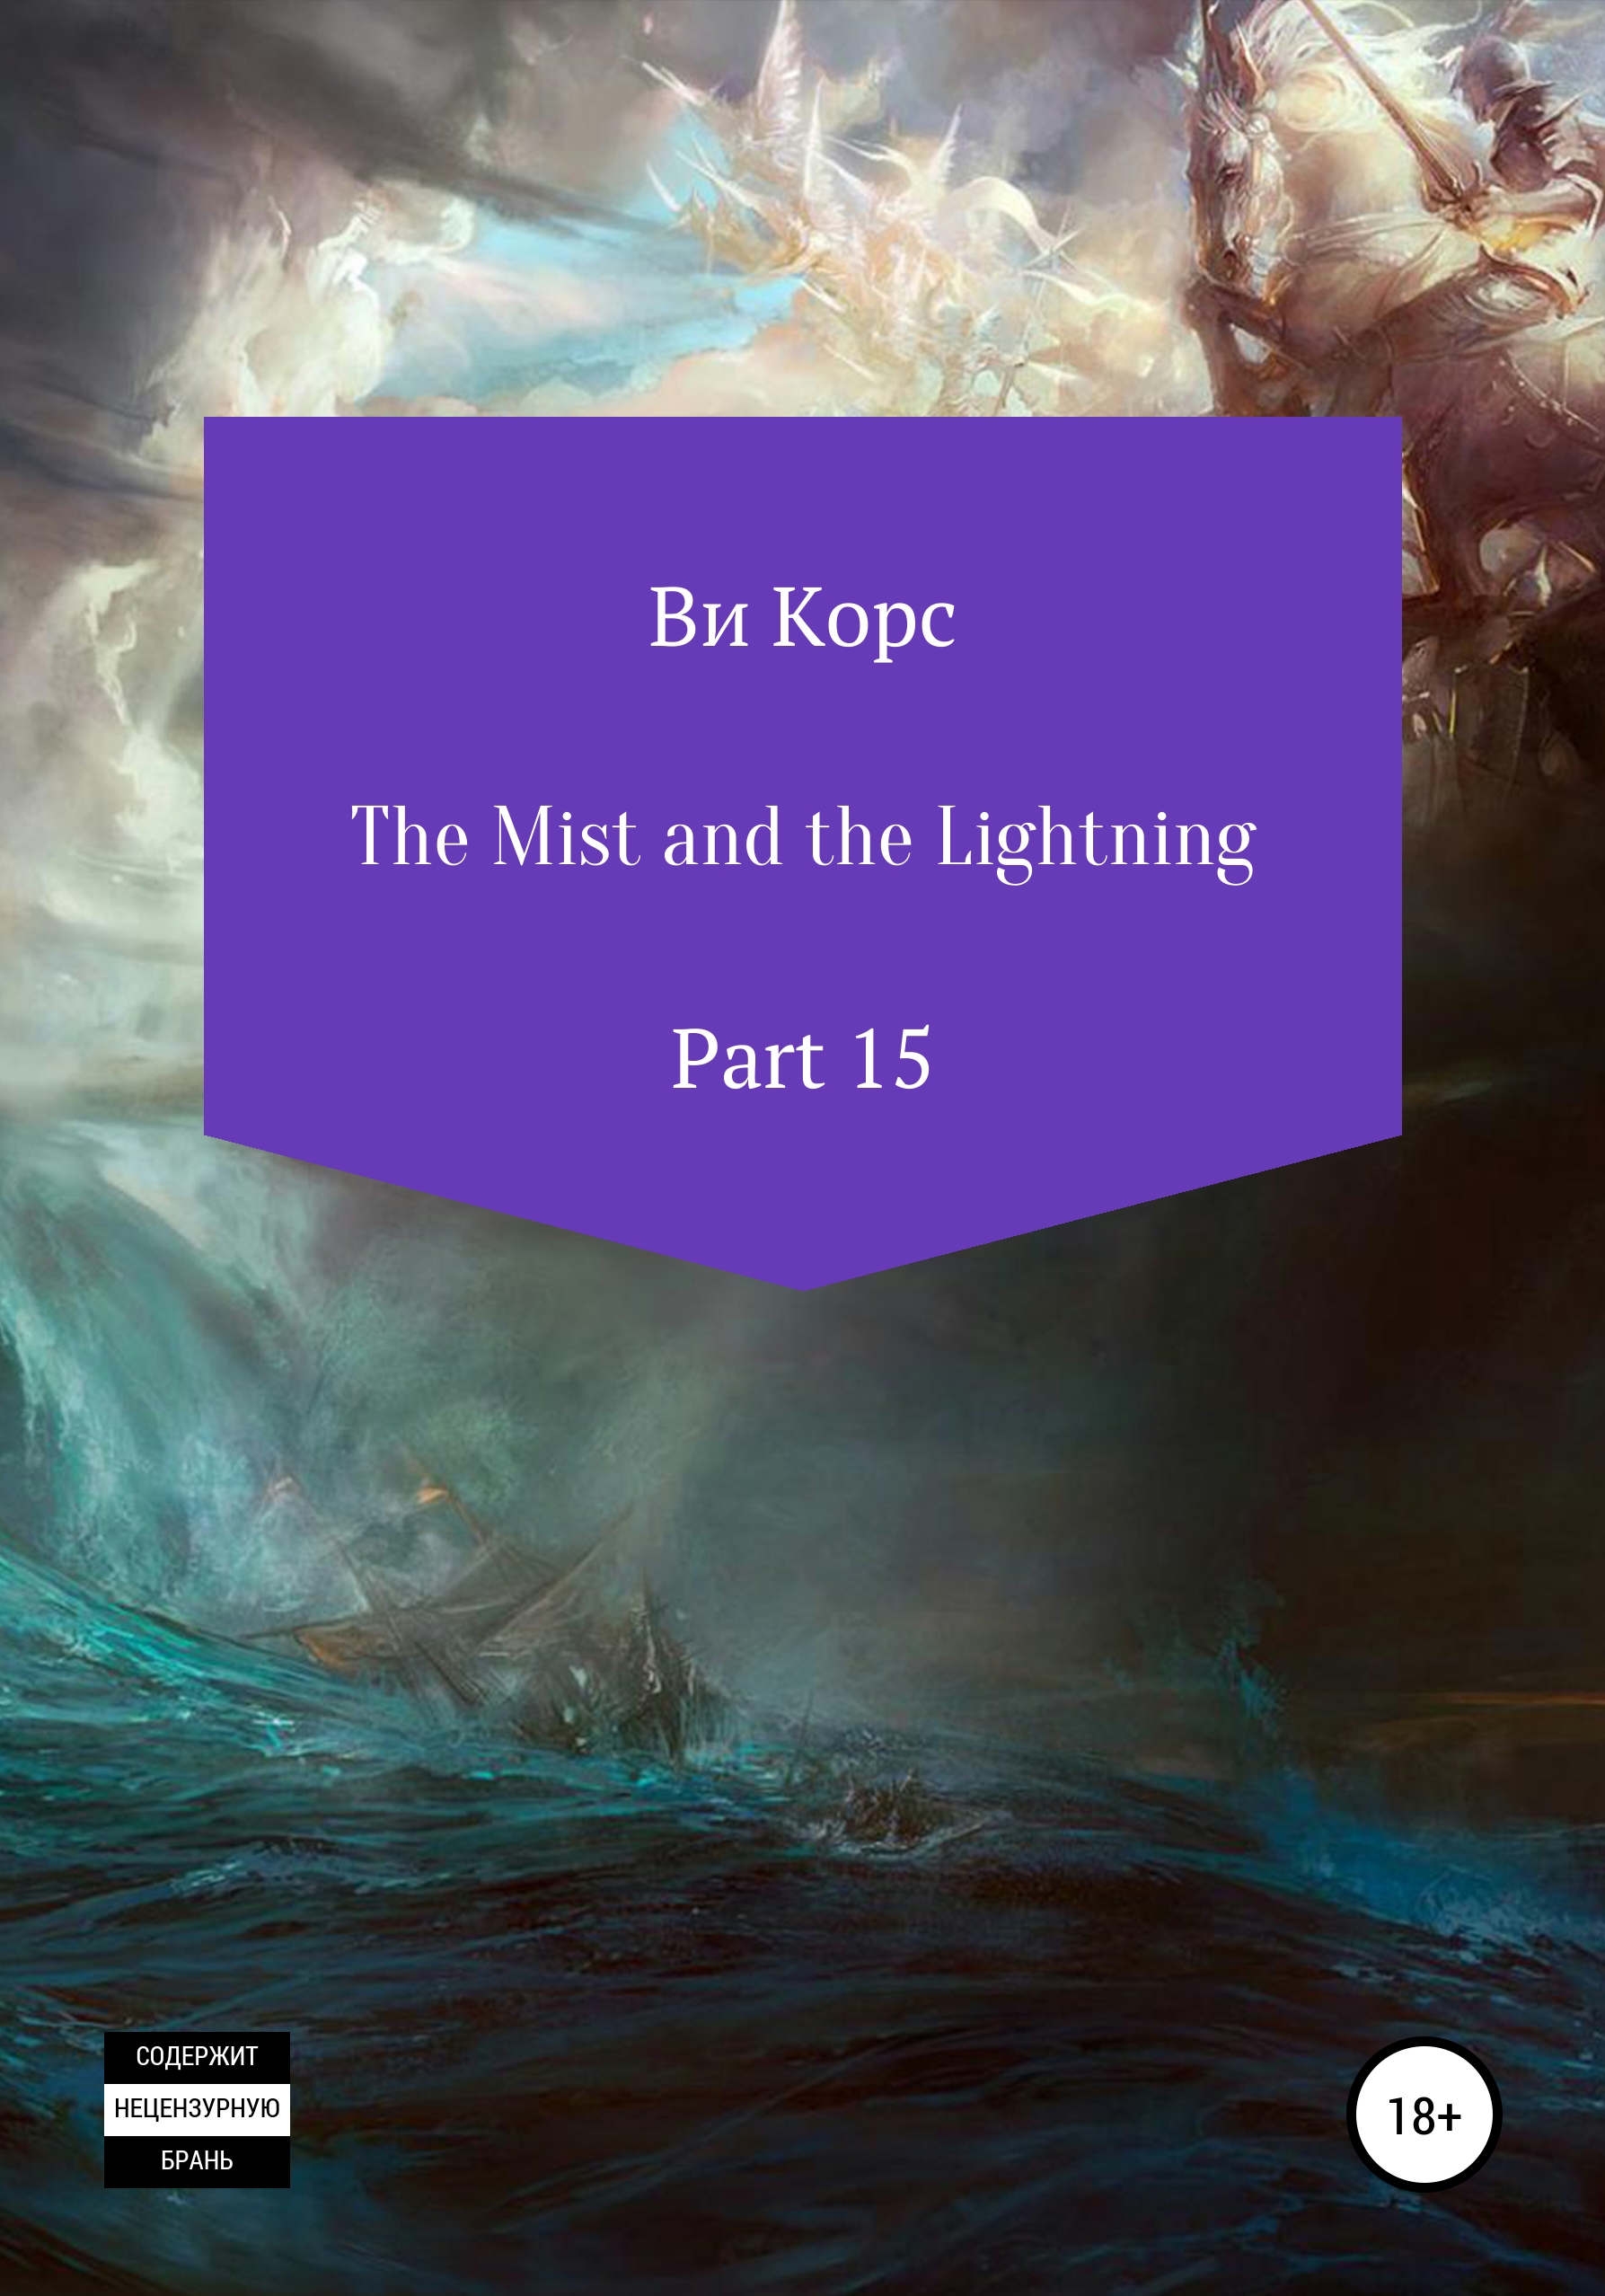 The Mist and the Lightning. Part 15 – Ви Корс